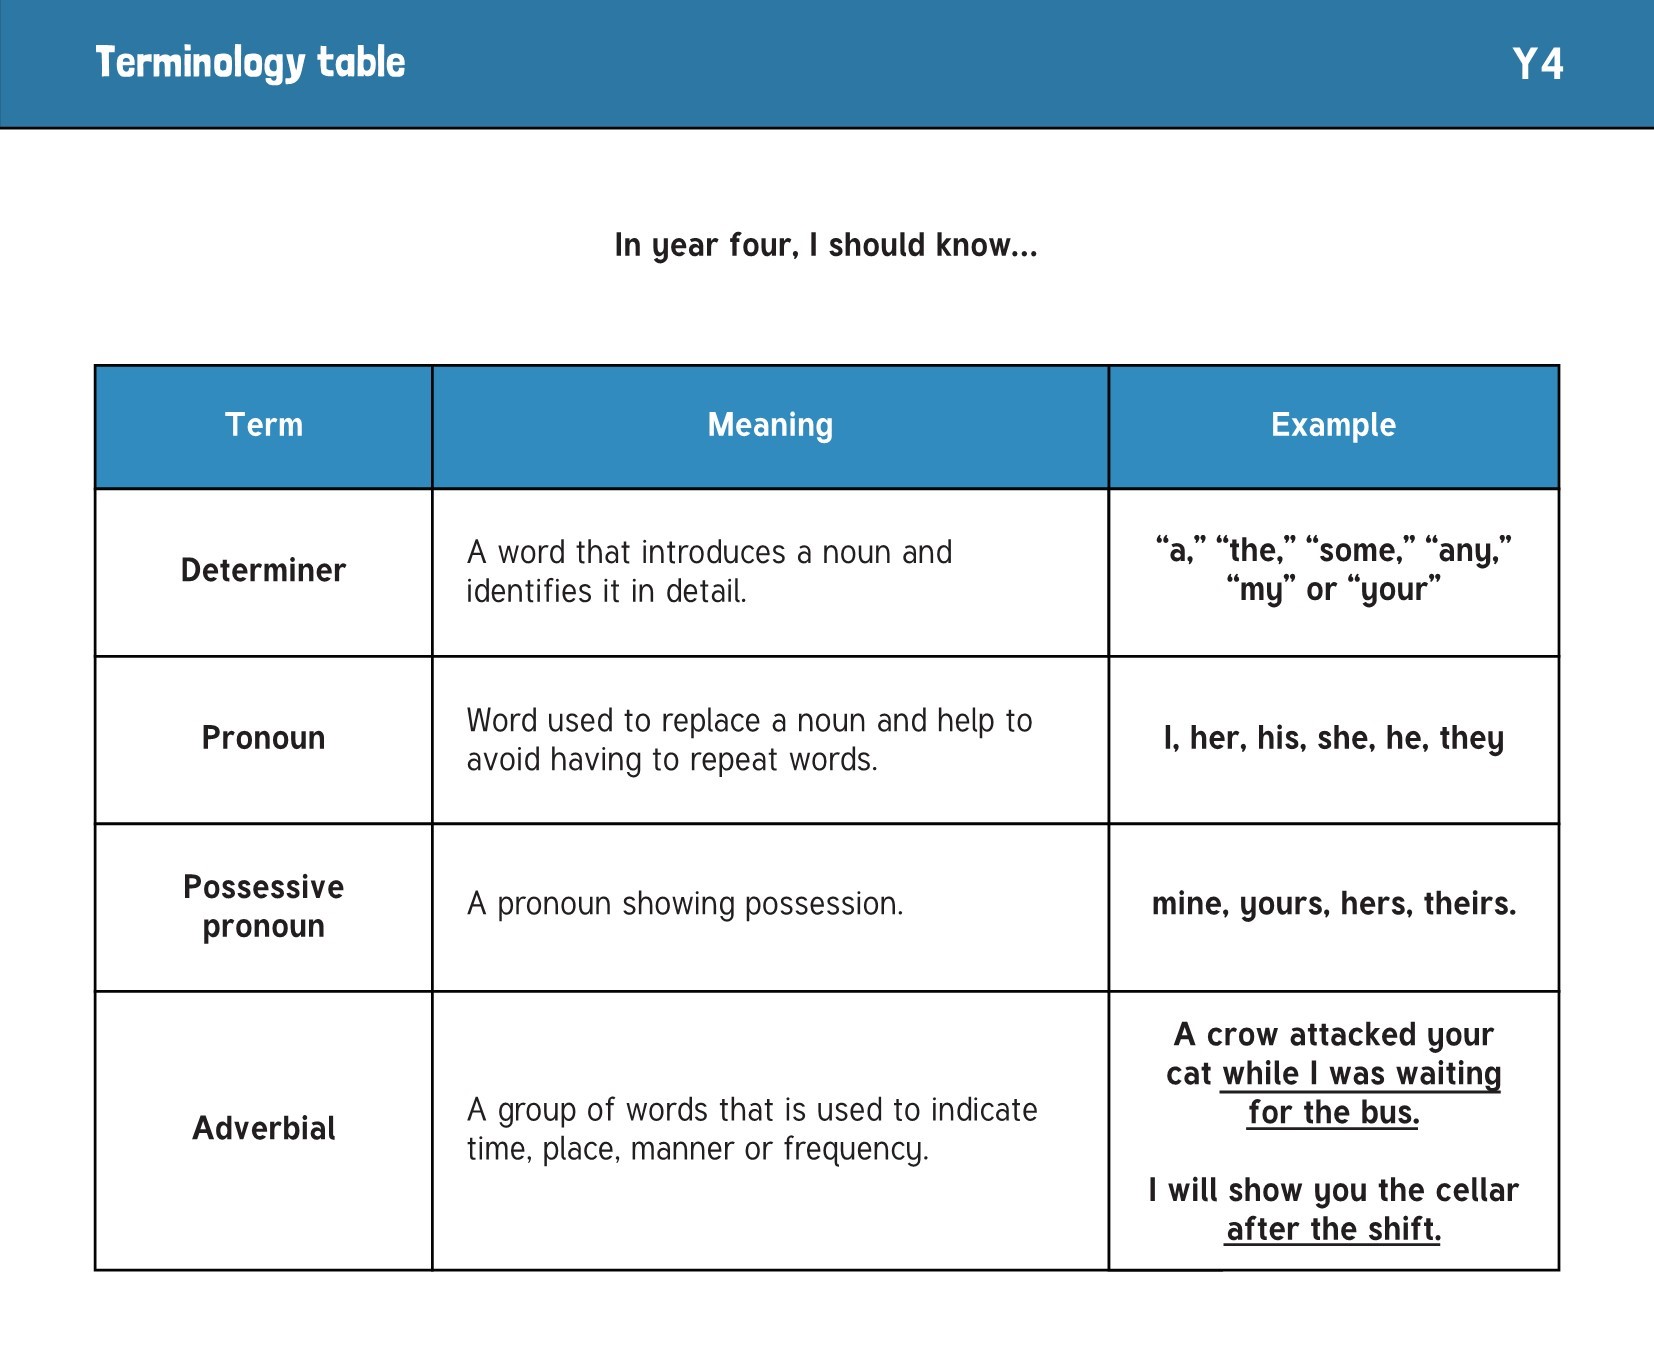 Grammar terminology table Yr4